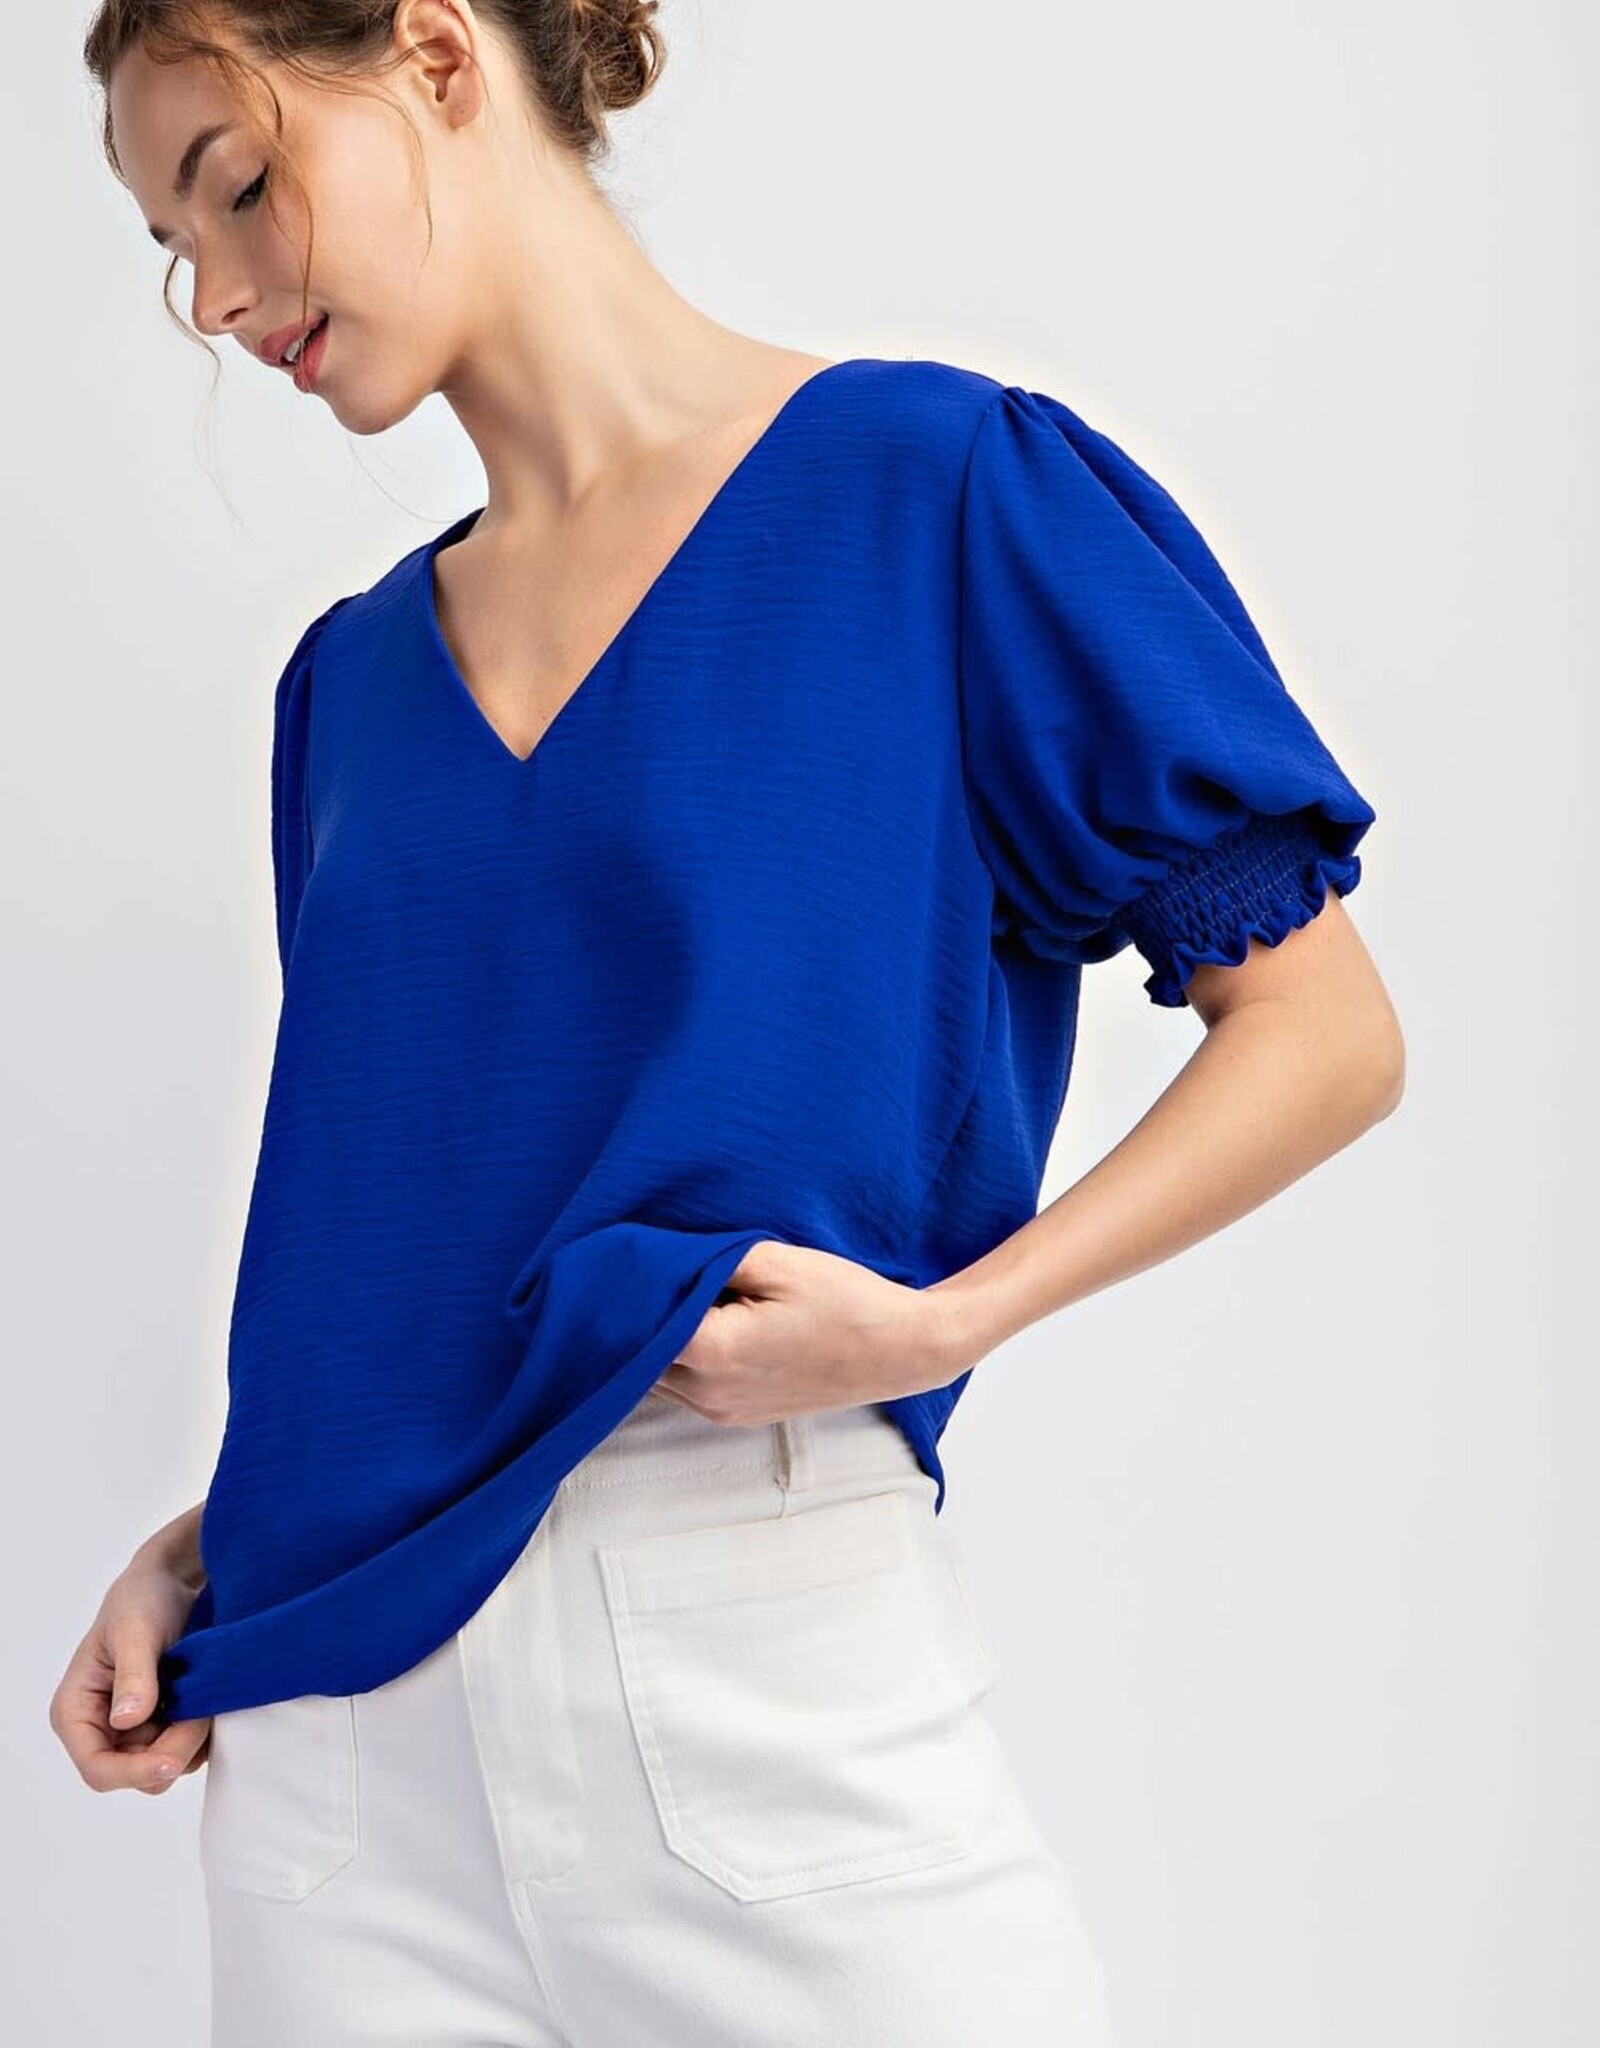 - Royal Blue V-Neck Short Blouson Elastic Sleeve Top